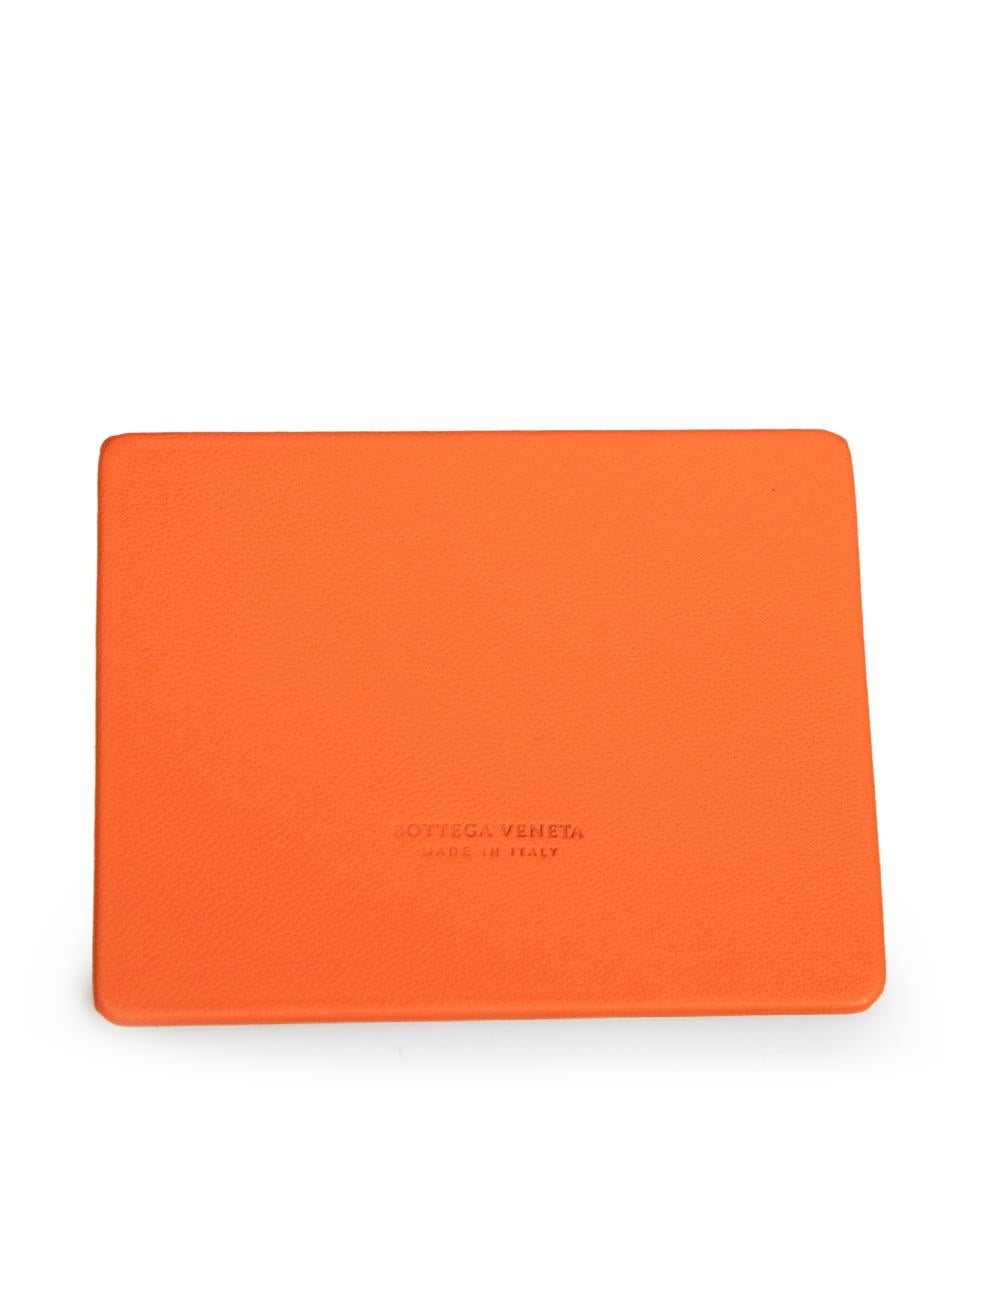 Bottega Veneta Orange Leather Intrecciato Parachute Bag 2